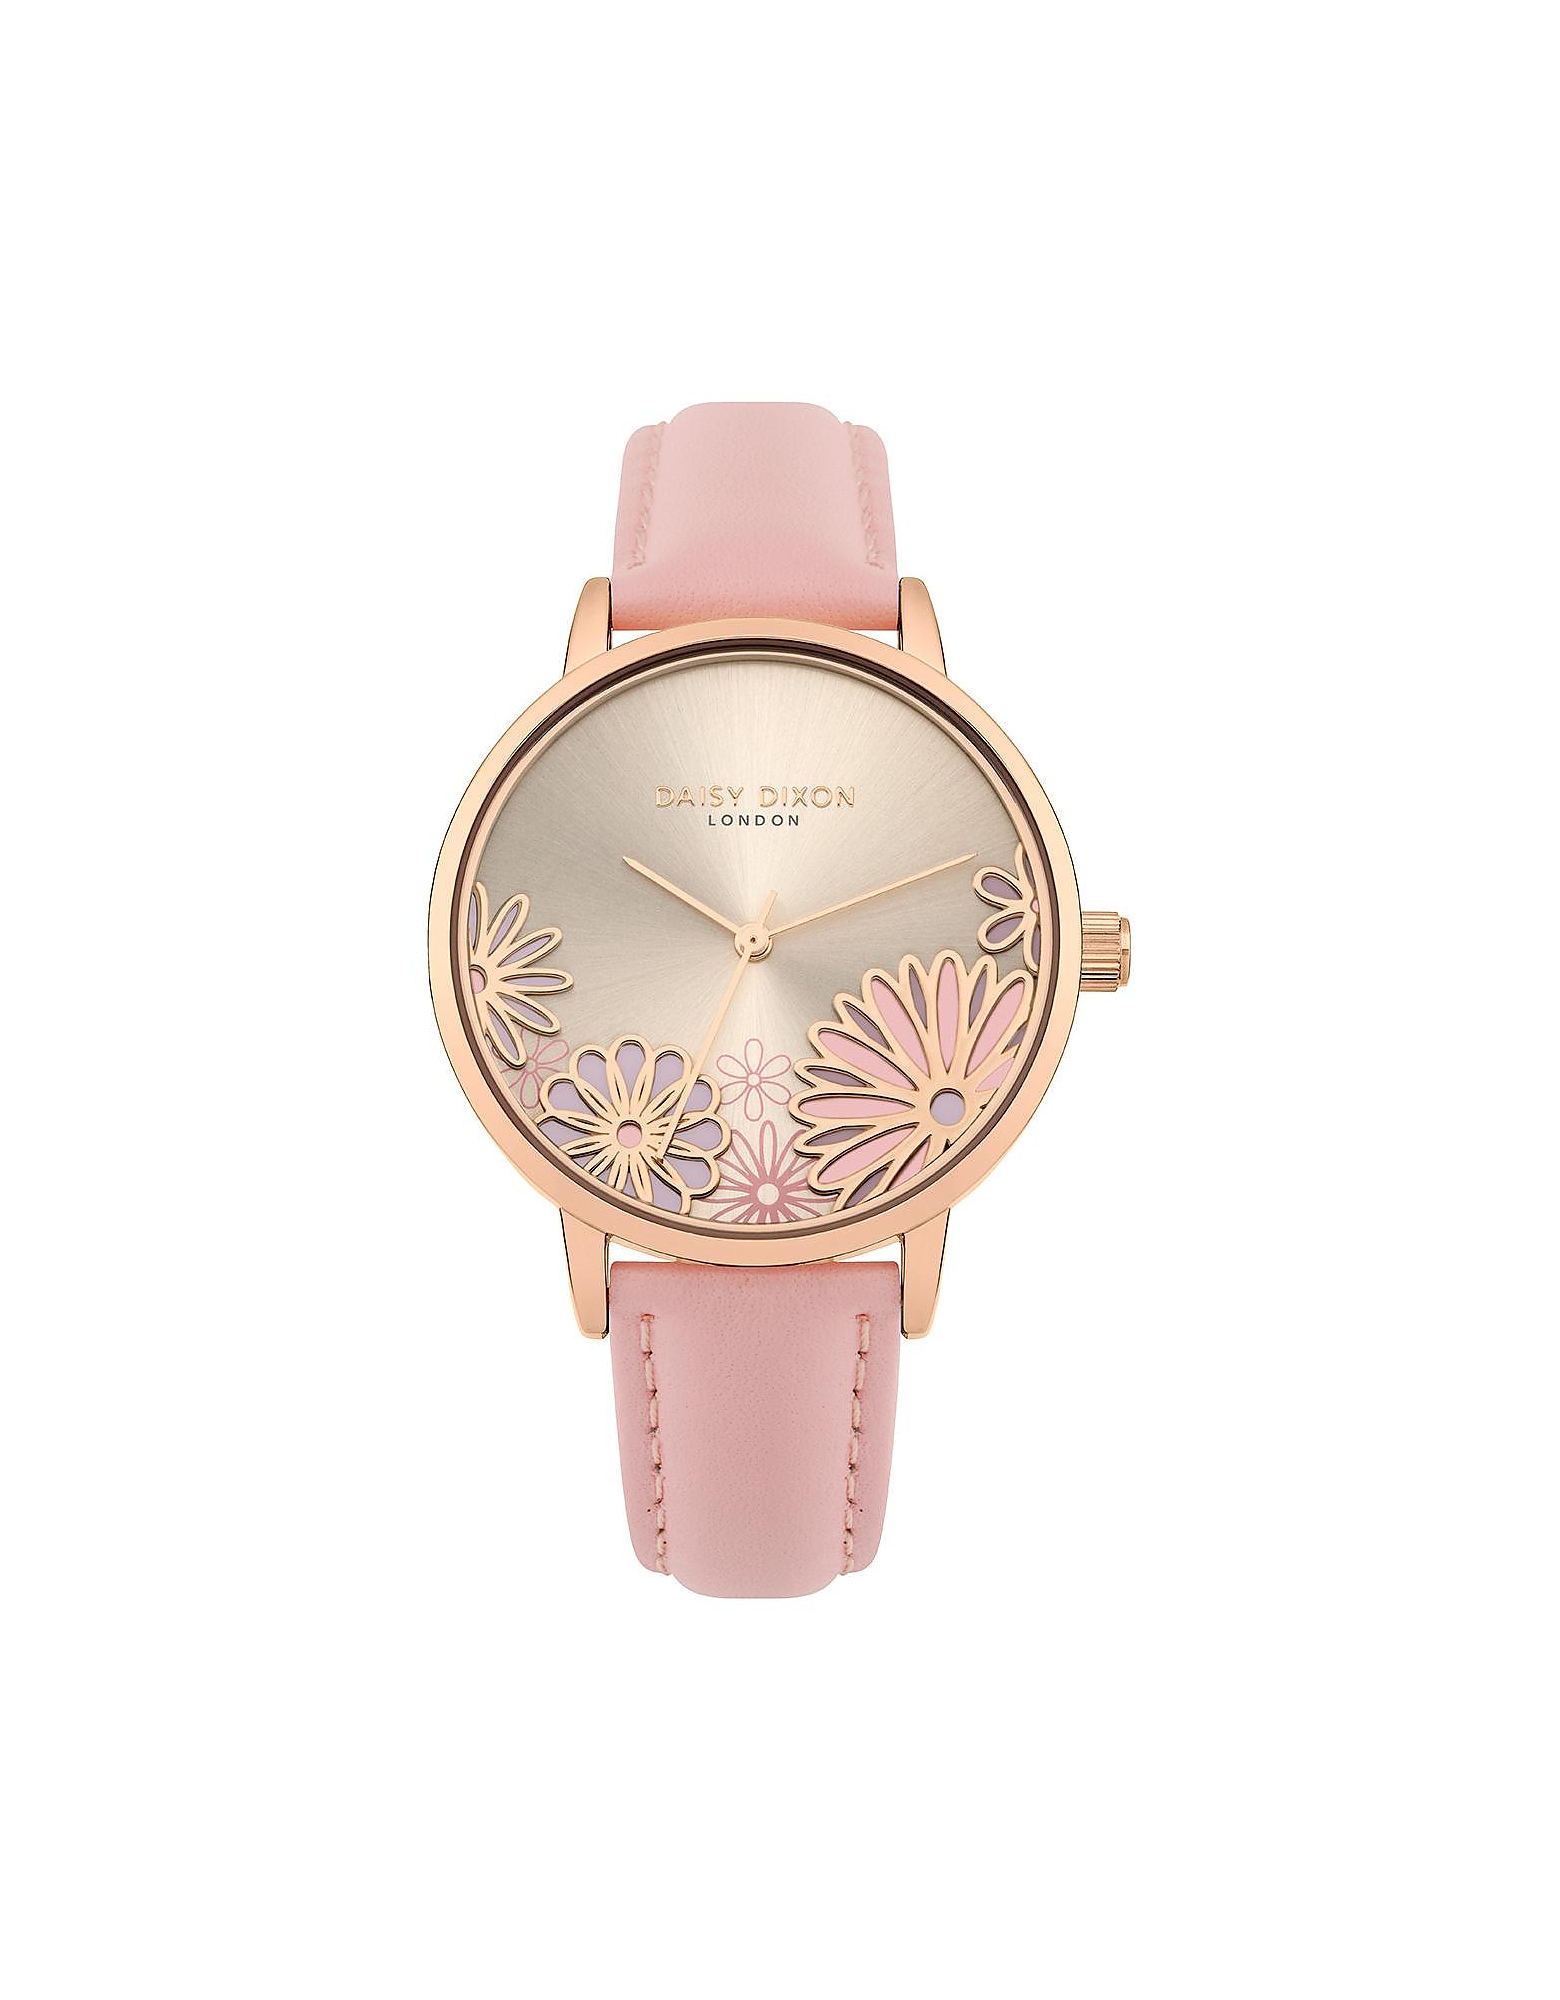 Daisy Dixon Designer Women's Watches Women's Quartz Analogue Watch In Pink